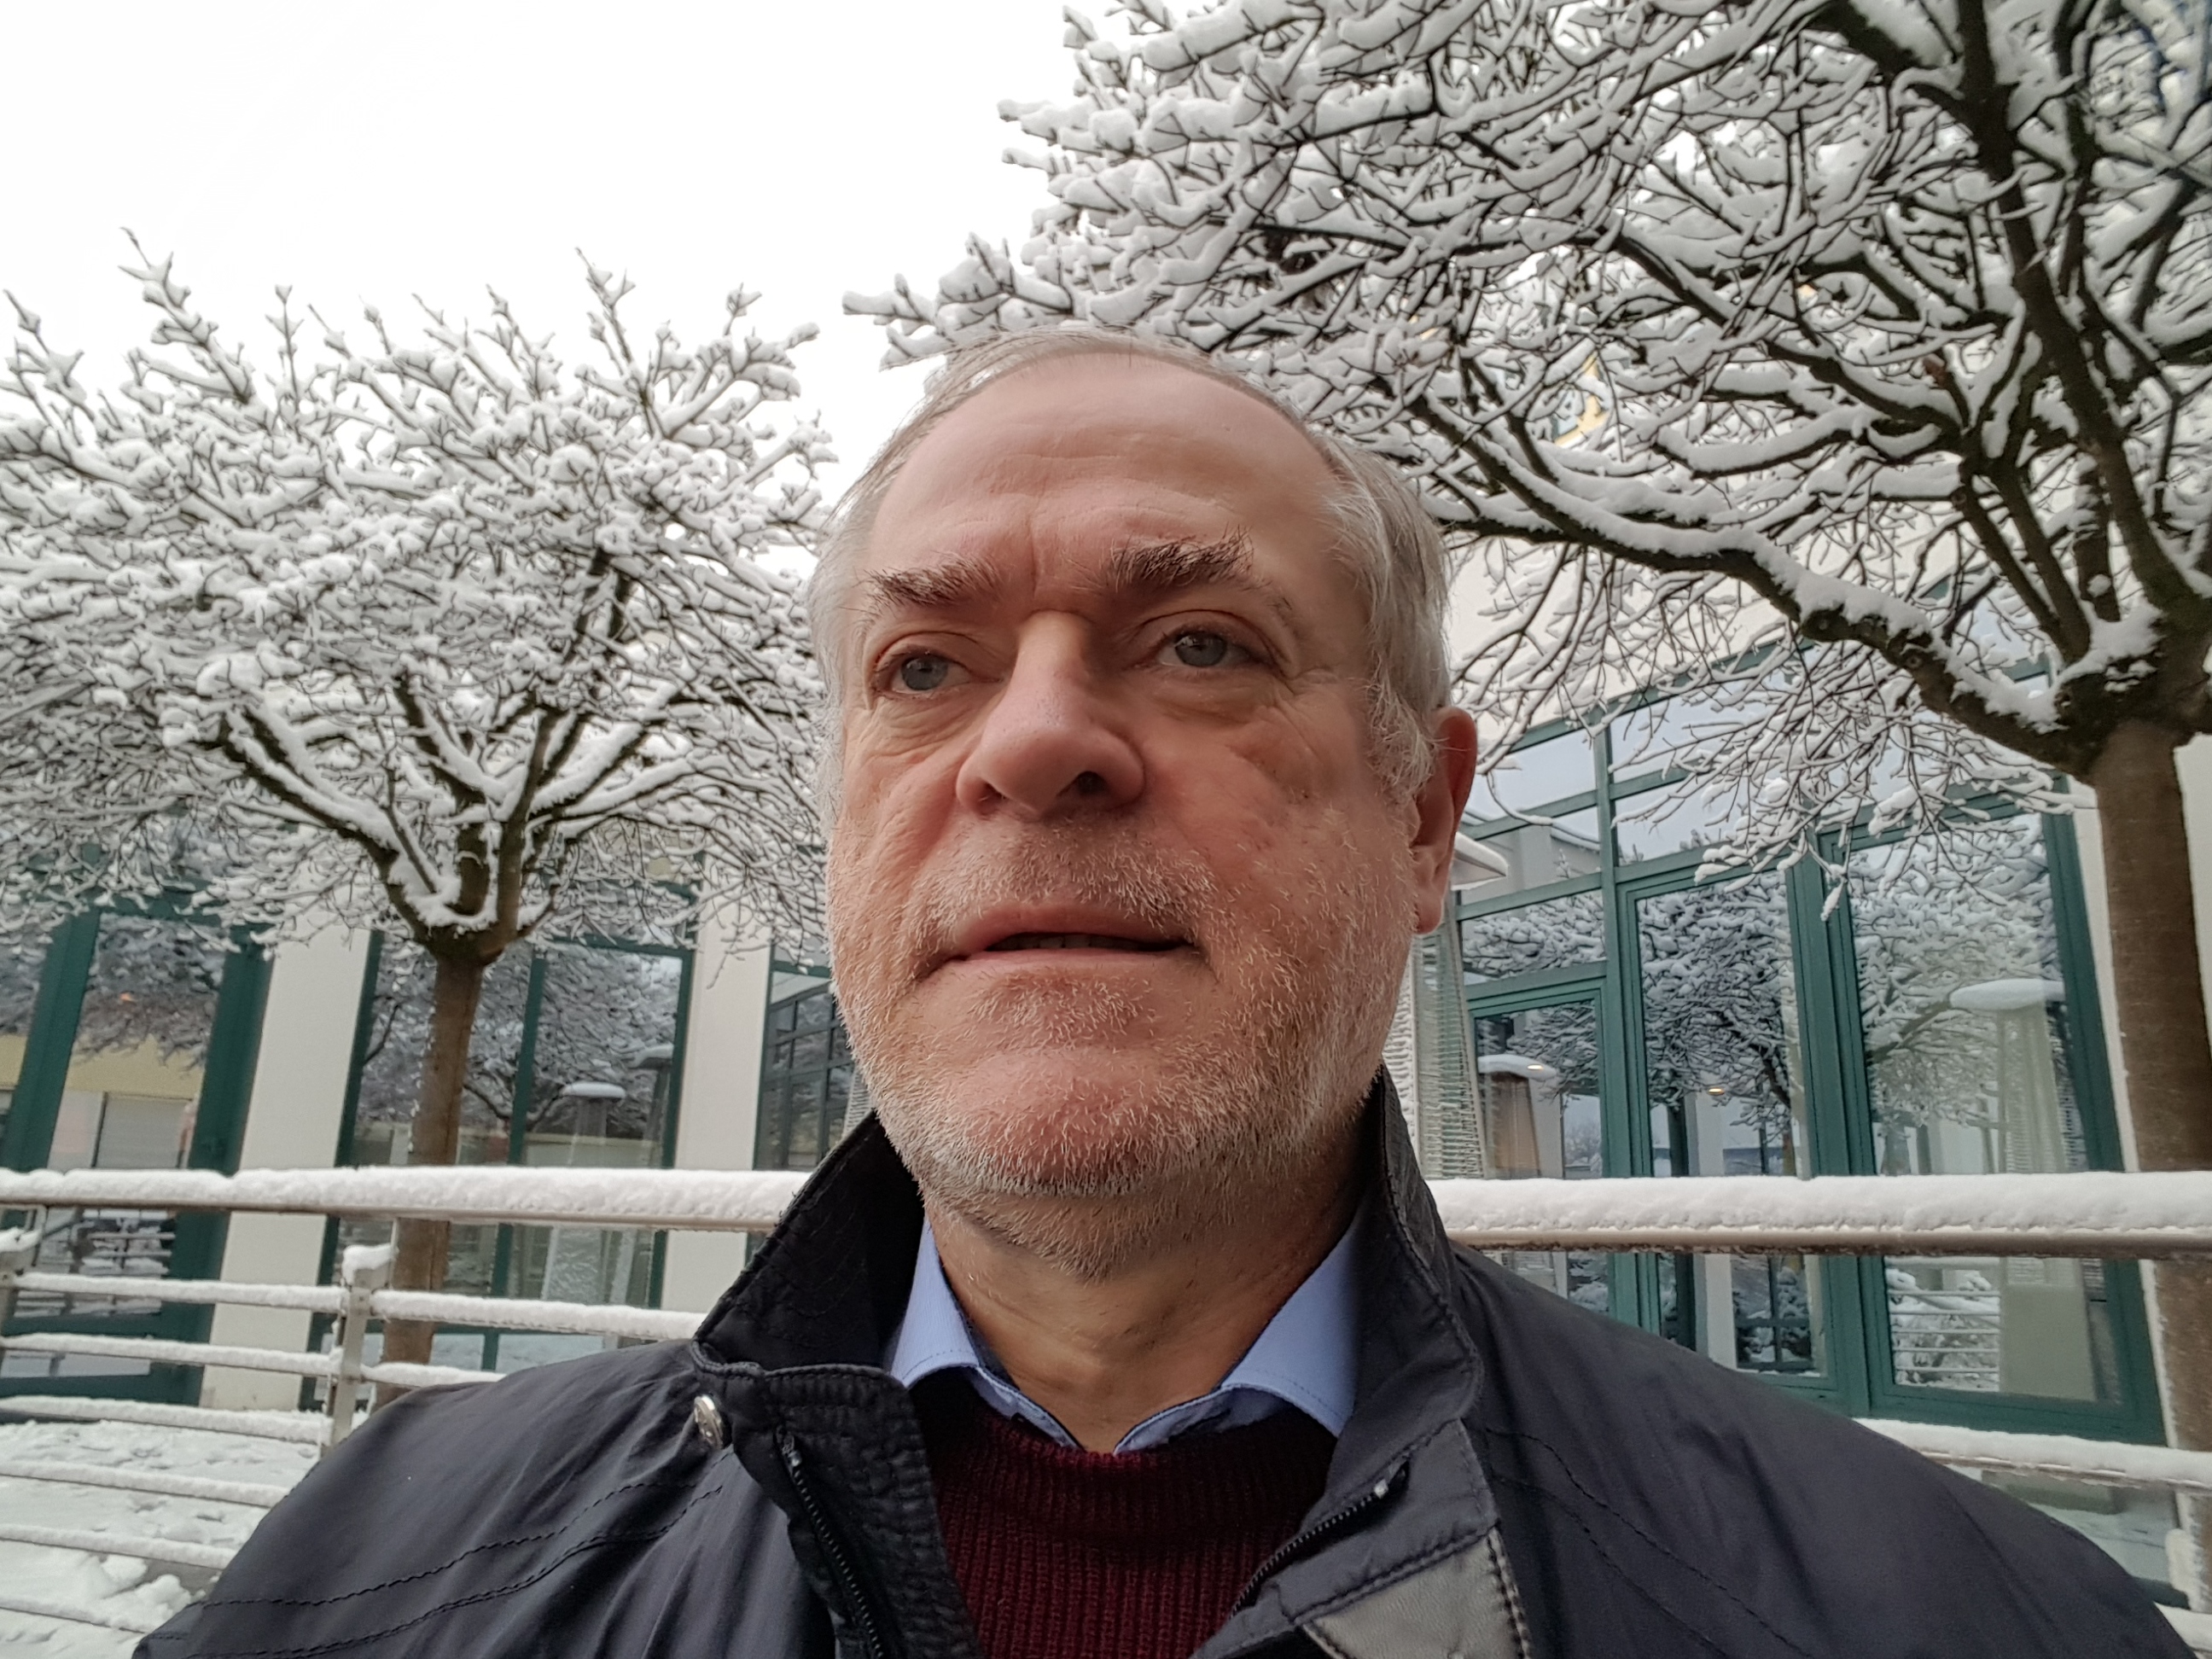 Stranded in Munich: Snowfall delayed return to Bonn/Cologne - Klaus F ...